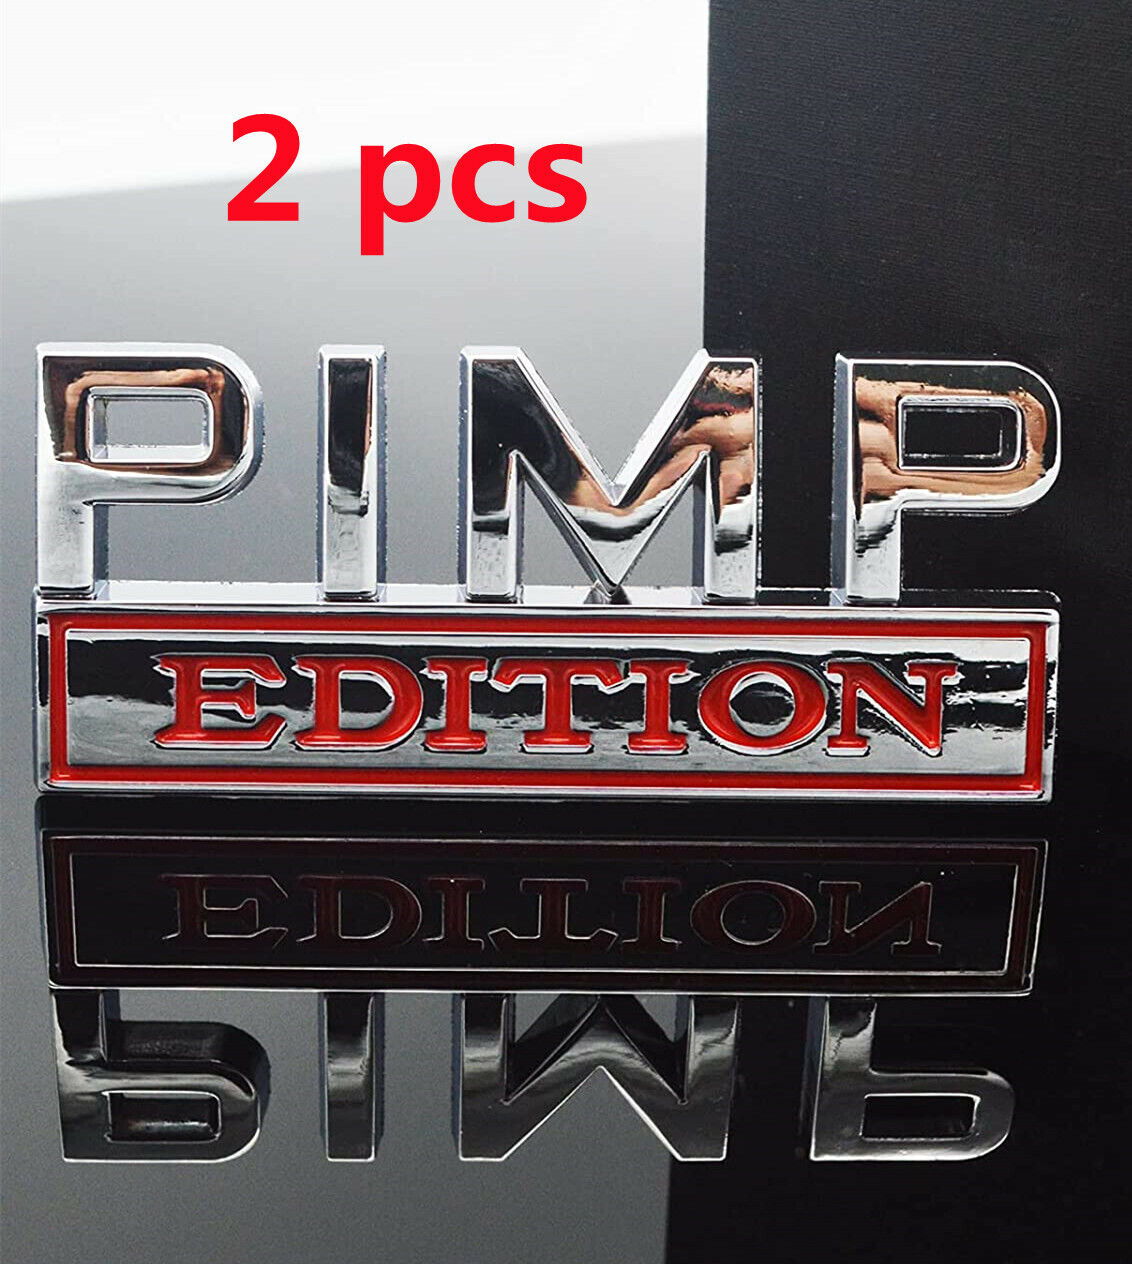 NEW 2pcs 3D PIMP EDITION Emblem Decal Badges Stickers fit Ford Chevy Car Truck